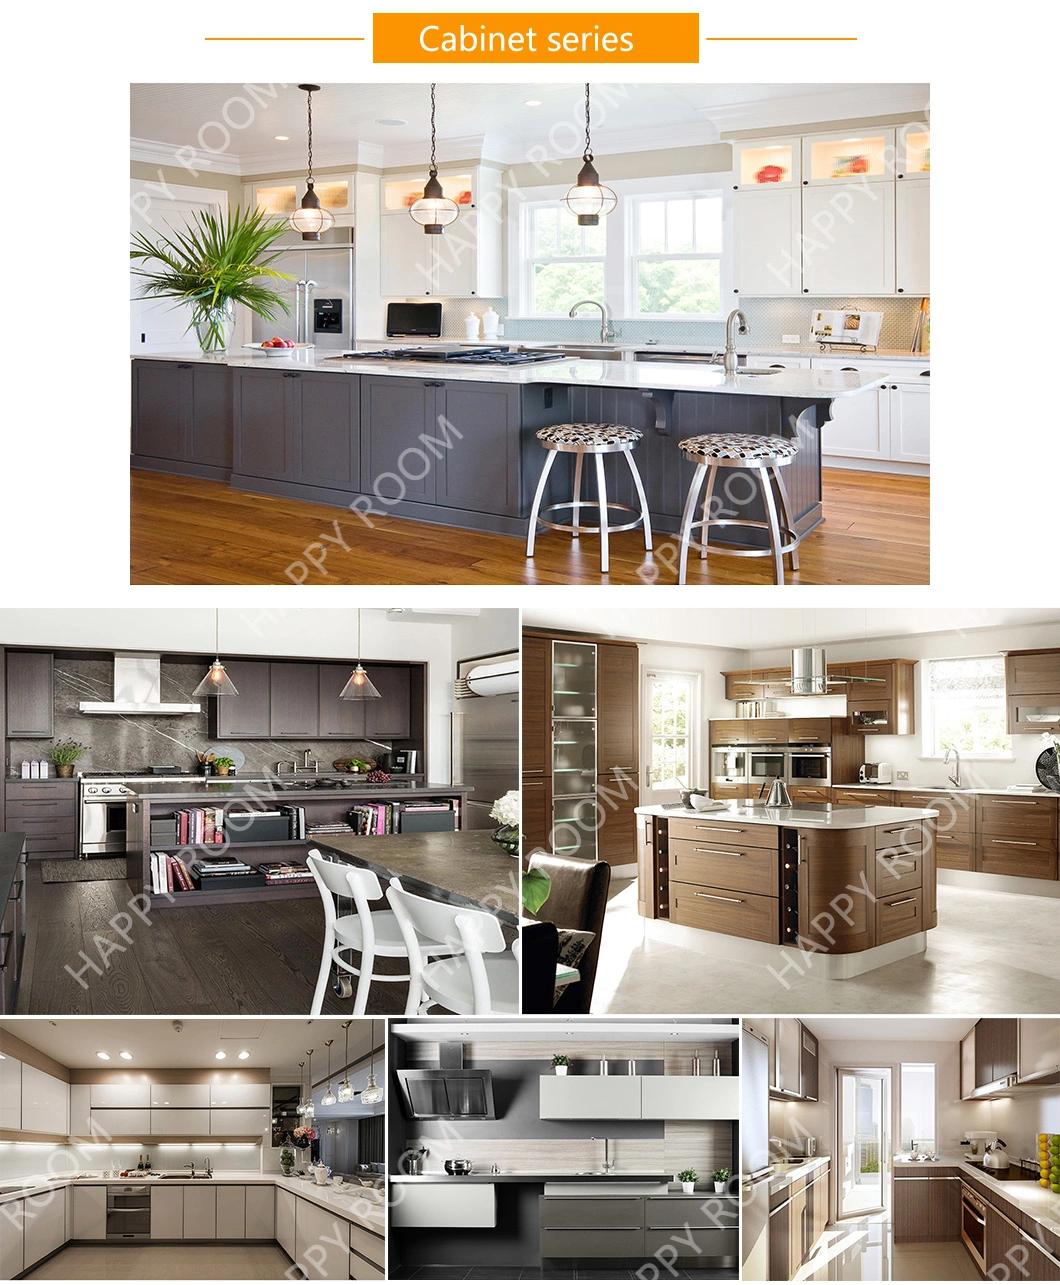 2021 Happyroom Modern Wooden Grain Aluminum Cabinet Furniture for Kitchen